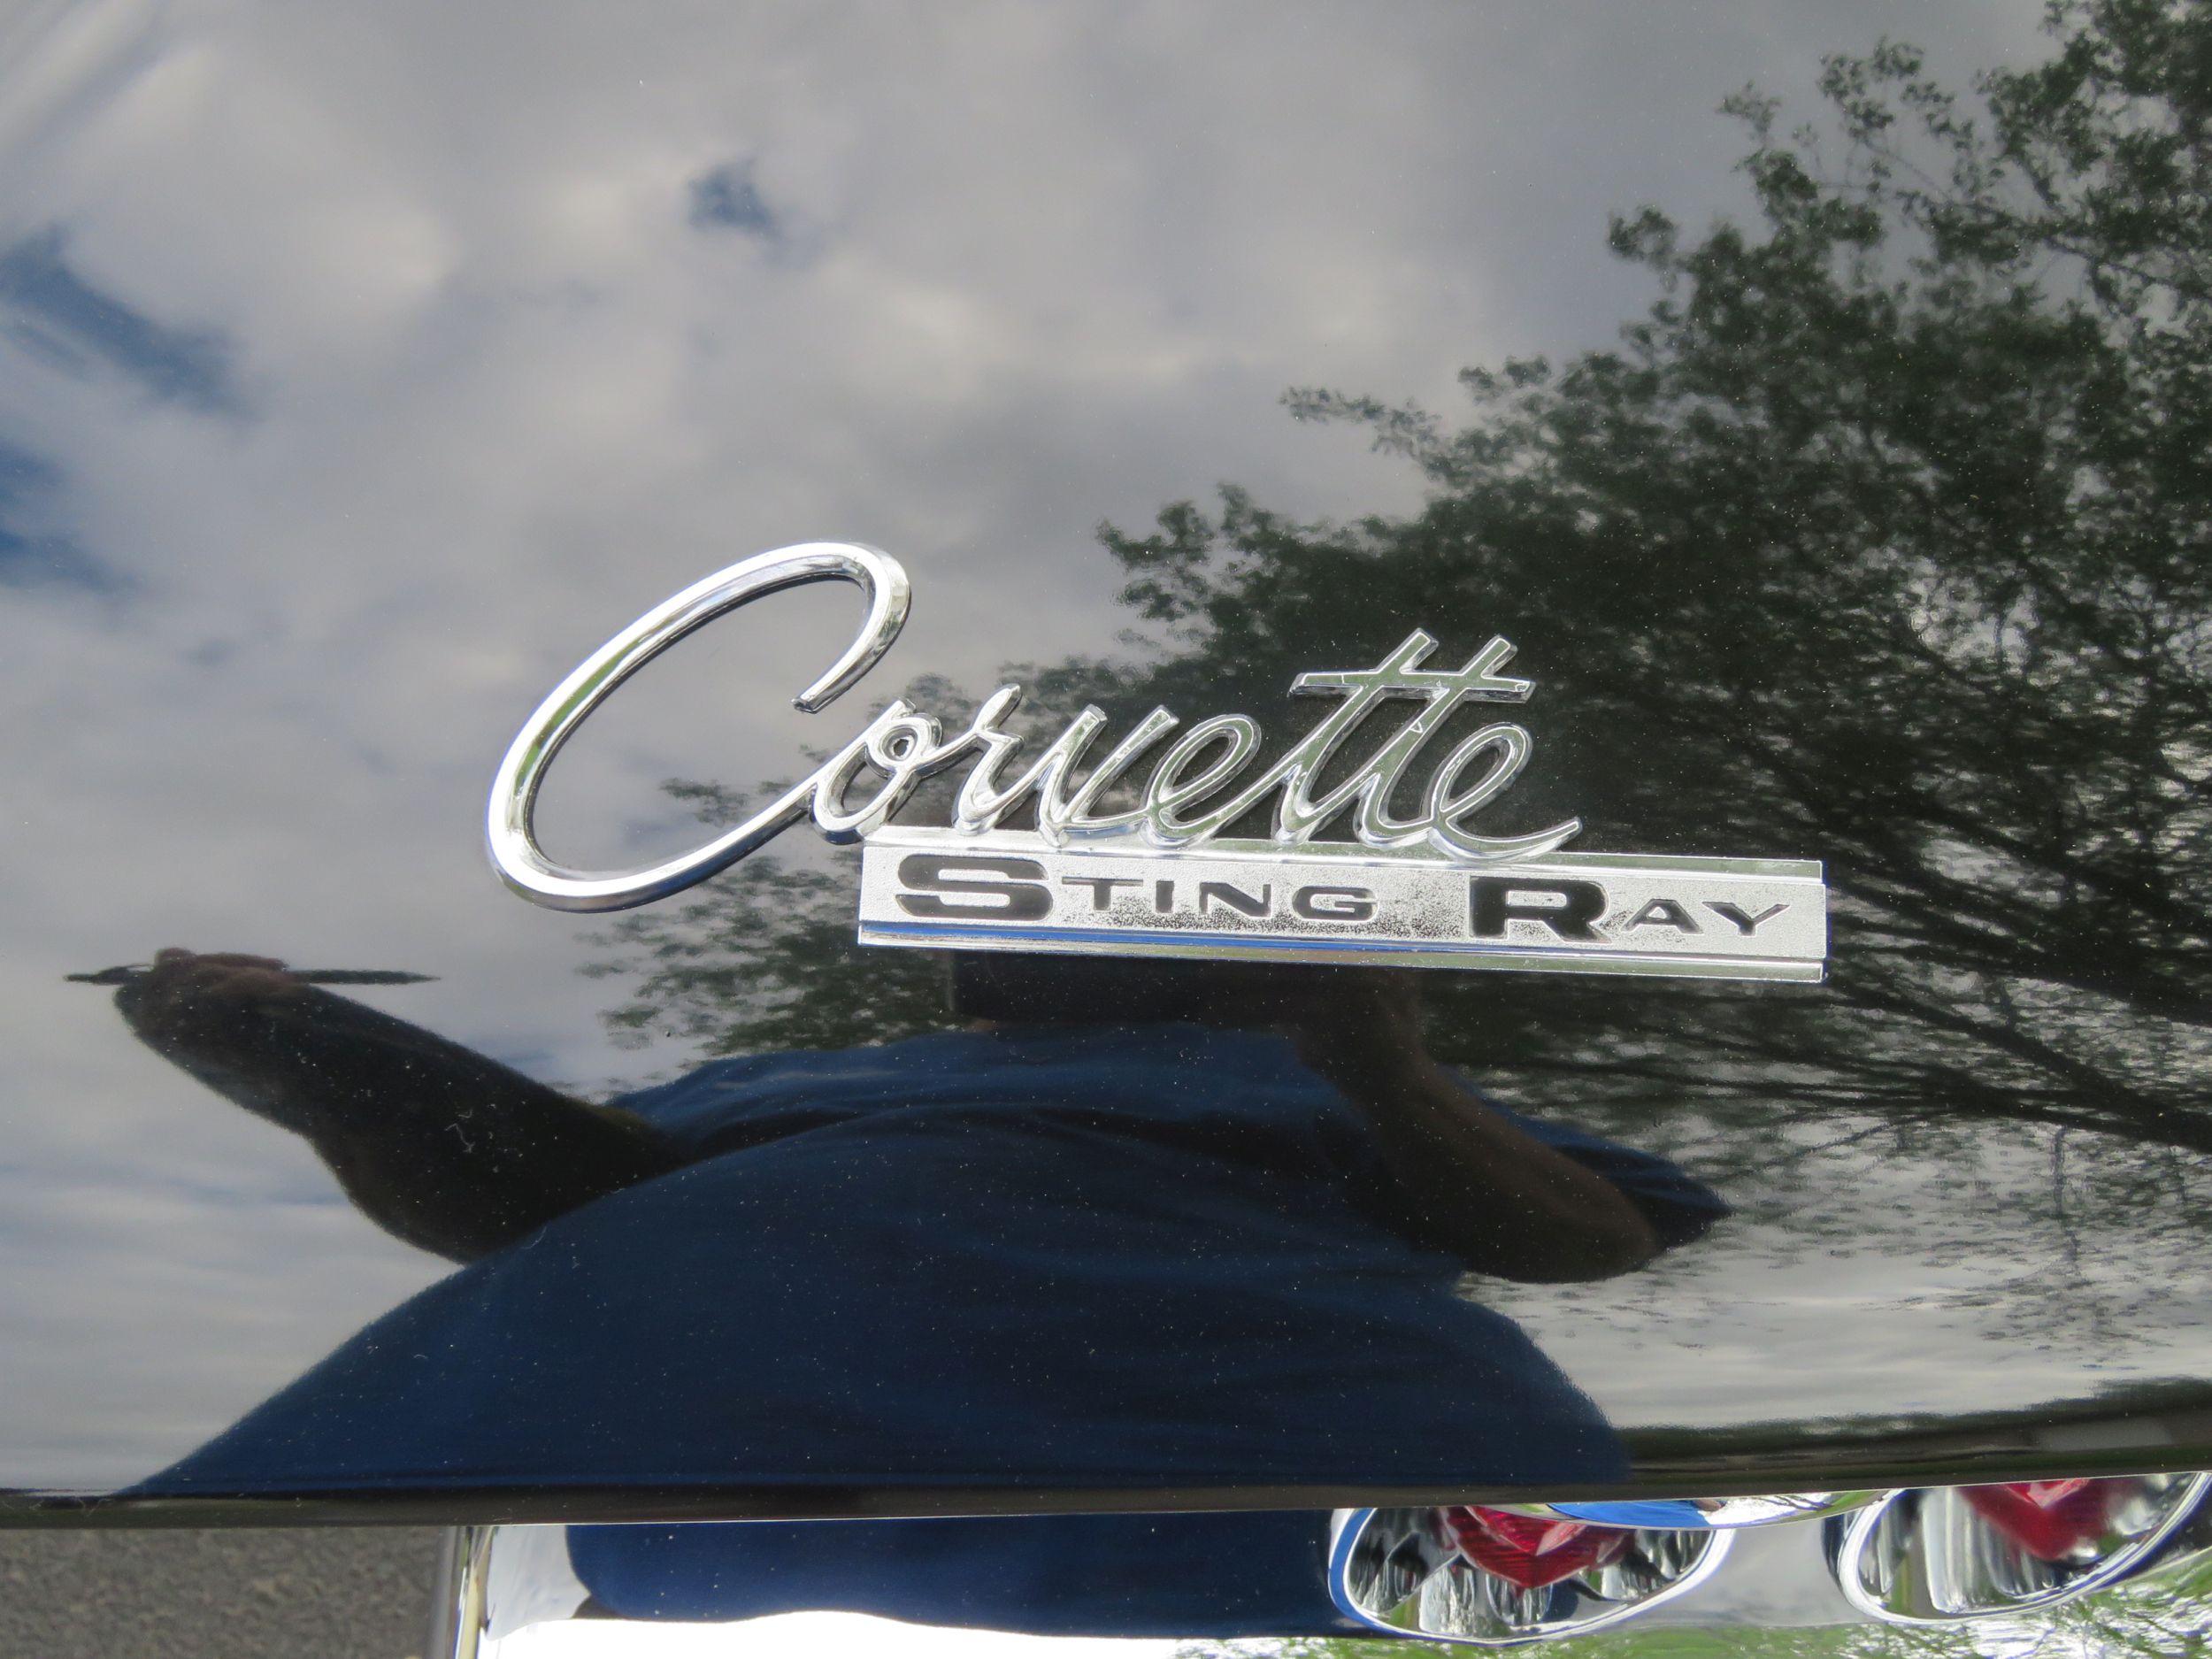 RARE 1963 Chevrolet Split Window Fuel Injected Corvette